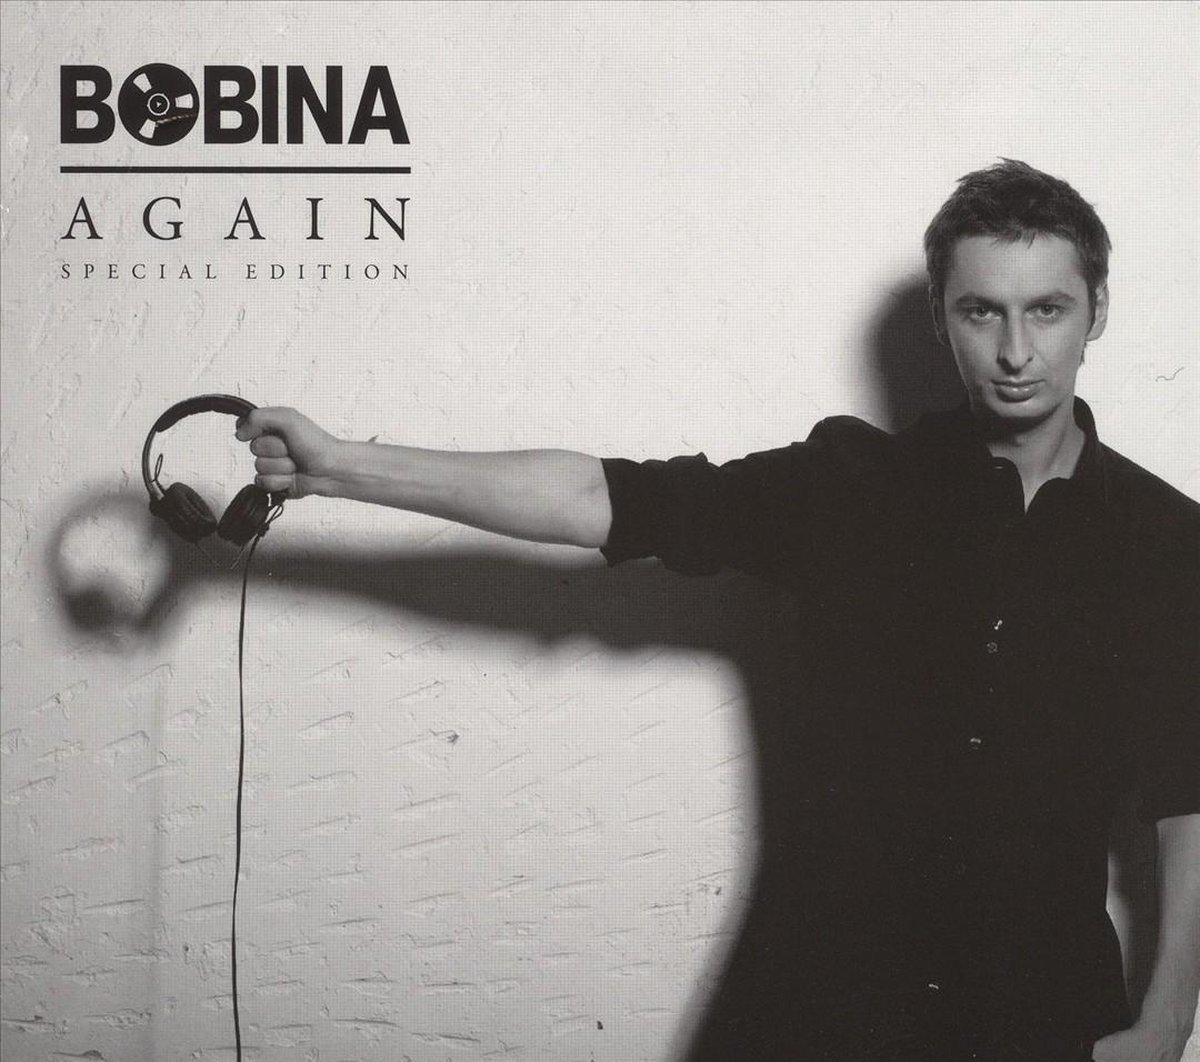 Bobbina - Again And Again Remixed - Bobina